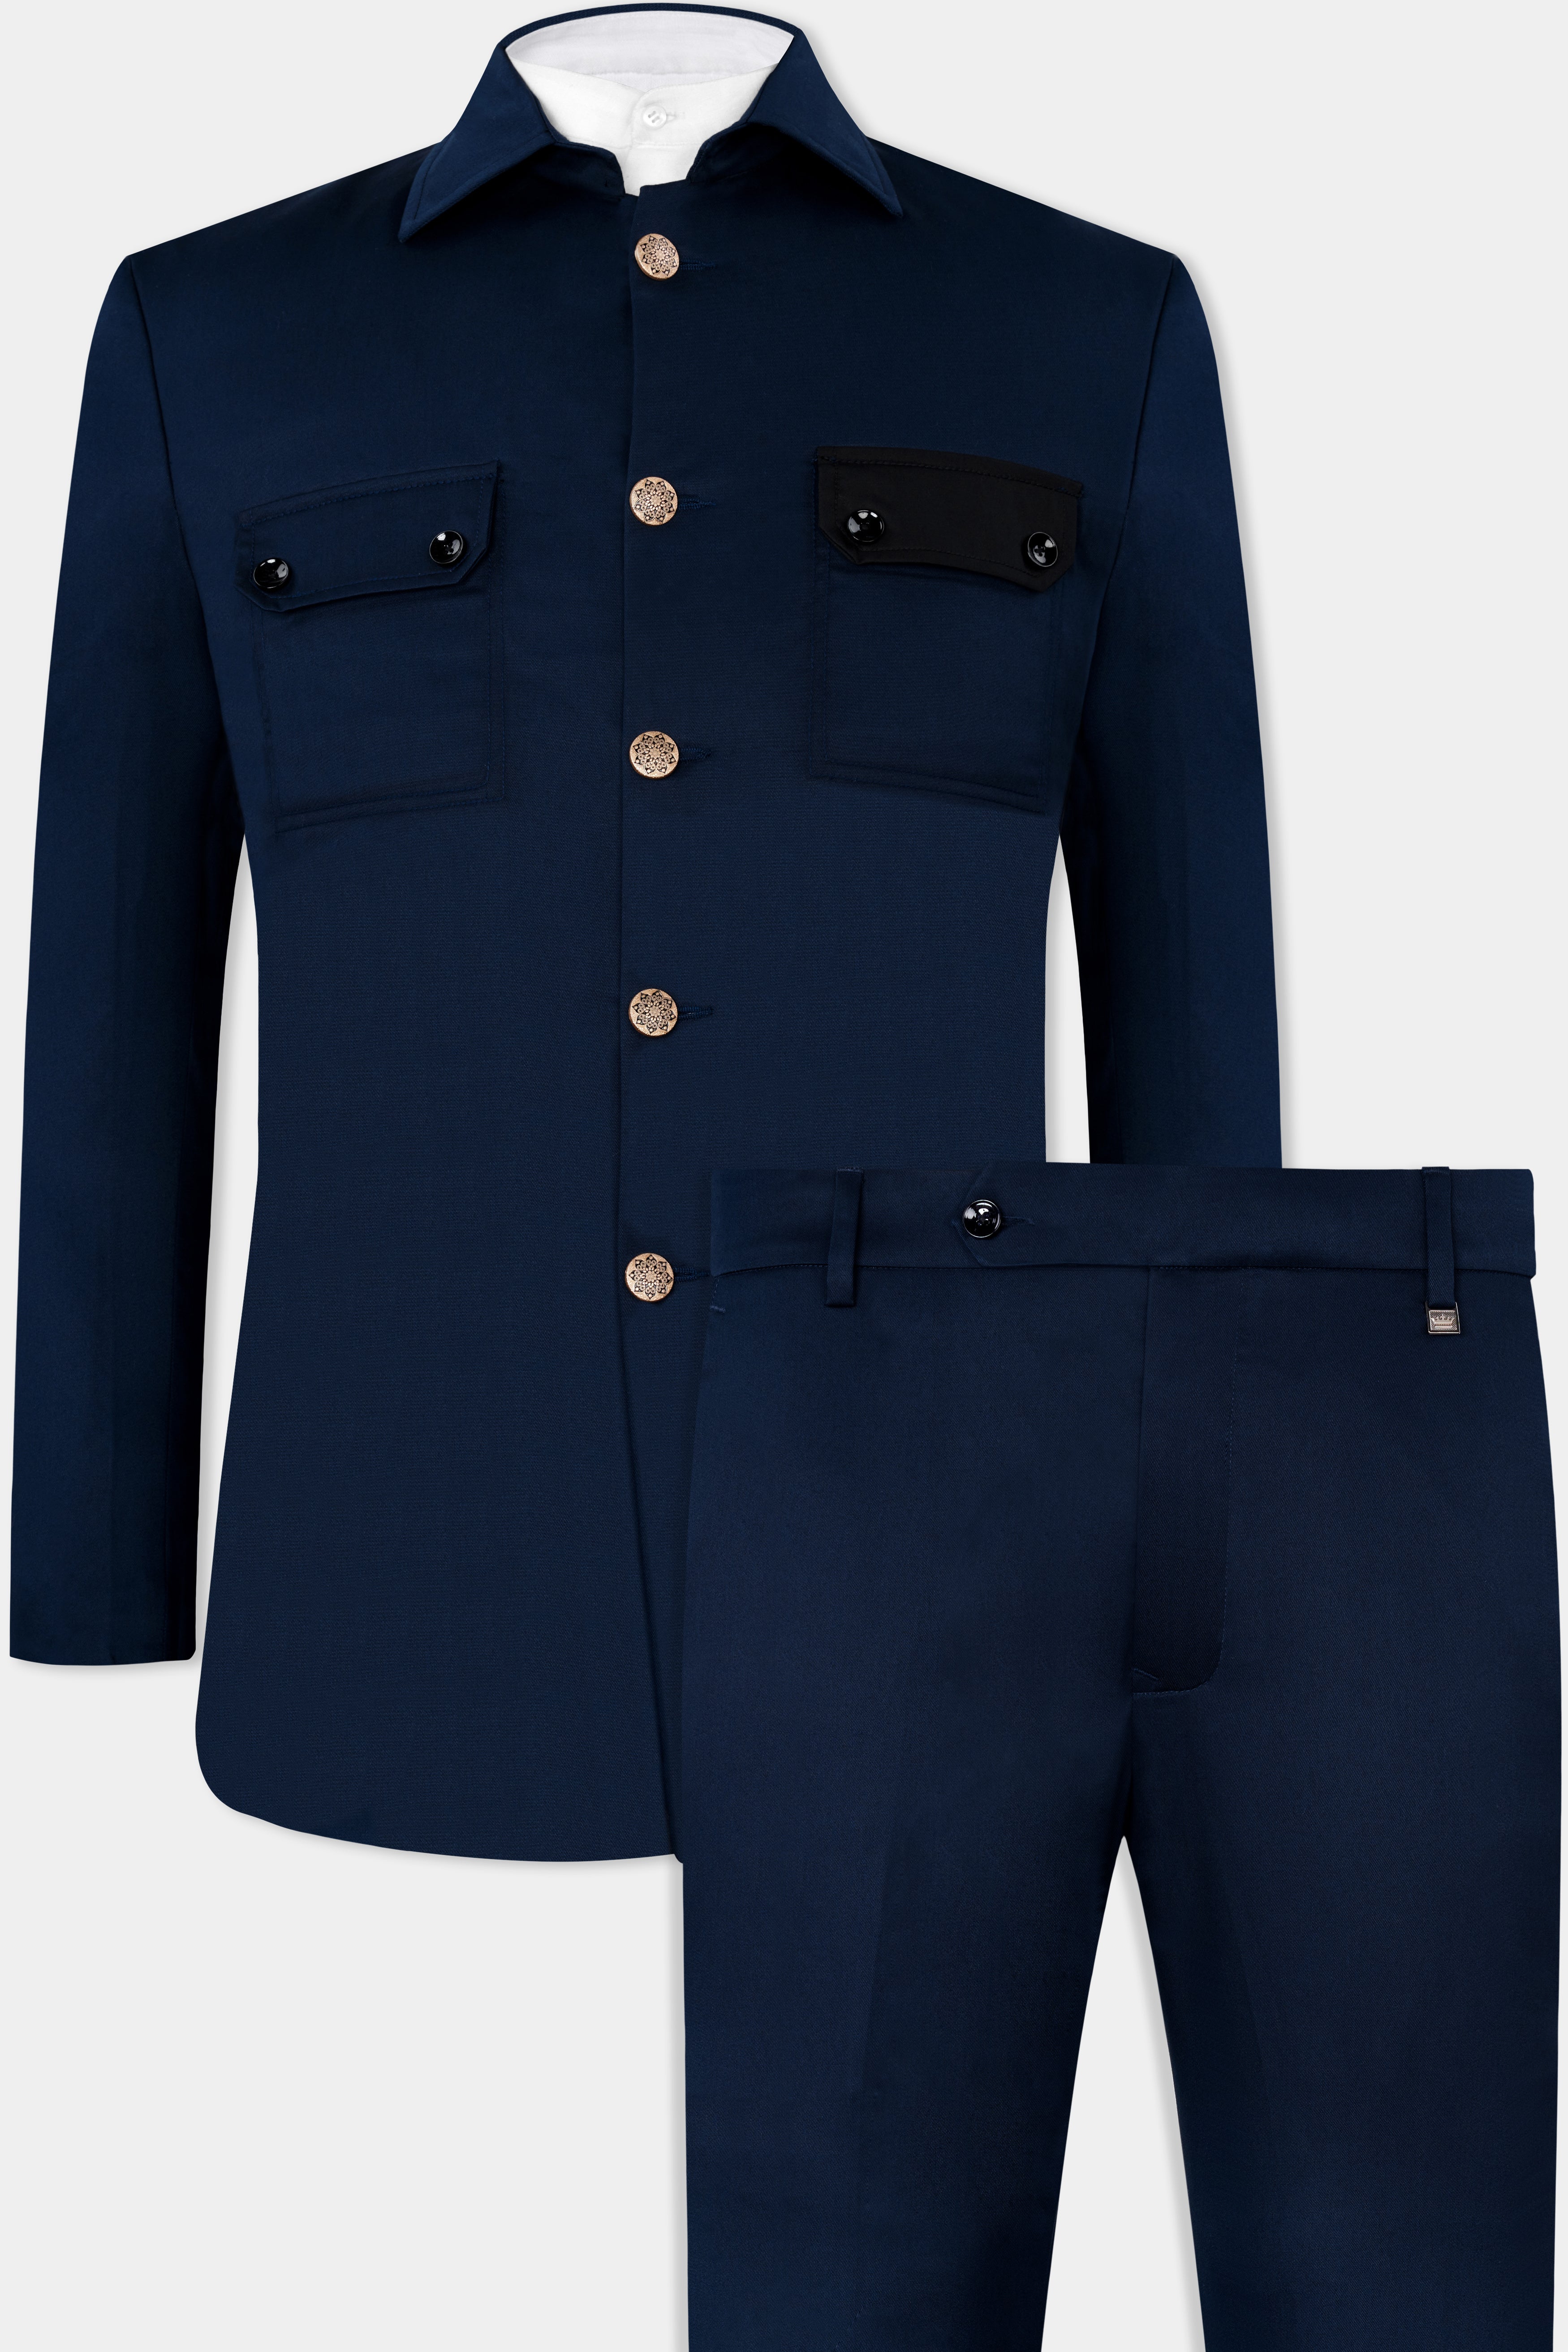 Delft Blue Premium Cotton Bandhgala Designer Suit ST2803-D82-36, ST2803-D82-38, ST2803-D82-40, ST2803-D82-42, ST2803-D82-44, ST2803-D82-46, ST2803-D82-48, ST2803-D82-50, ST2803-D82-52, ST2803-D82-54, ST2803-D82-56, ST2803-D82-58, ST2803-D82-60